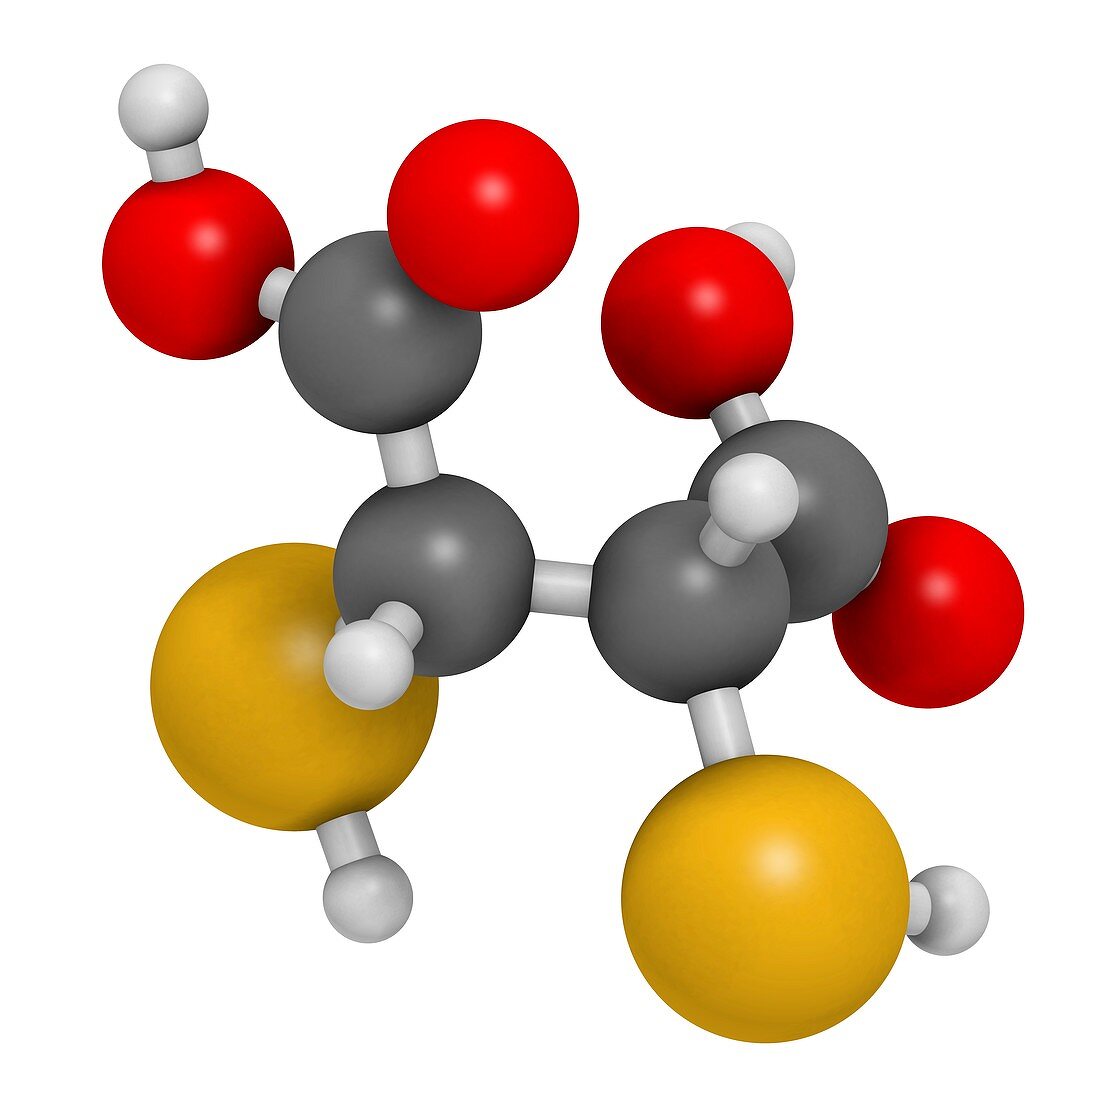 Succimer acid molecule